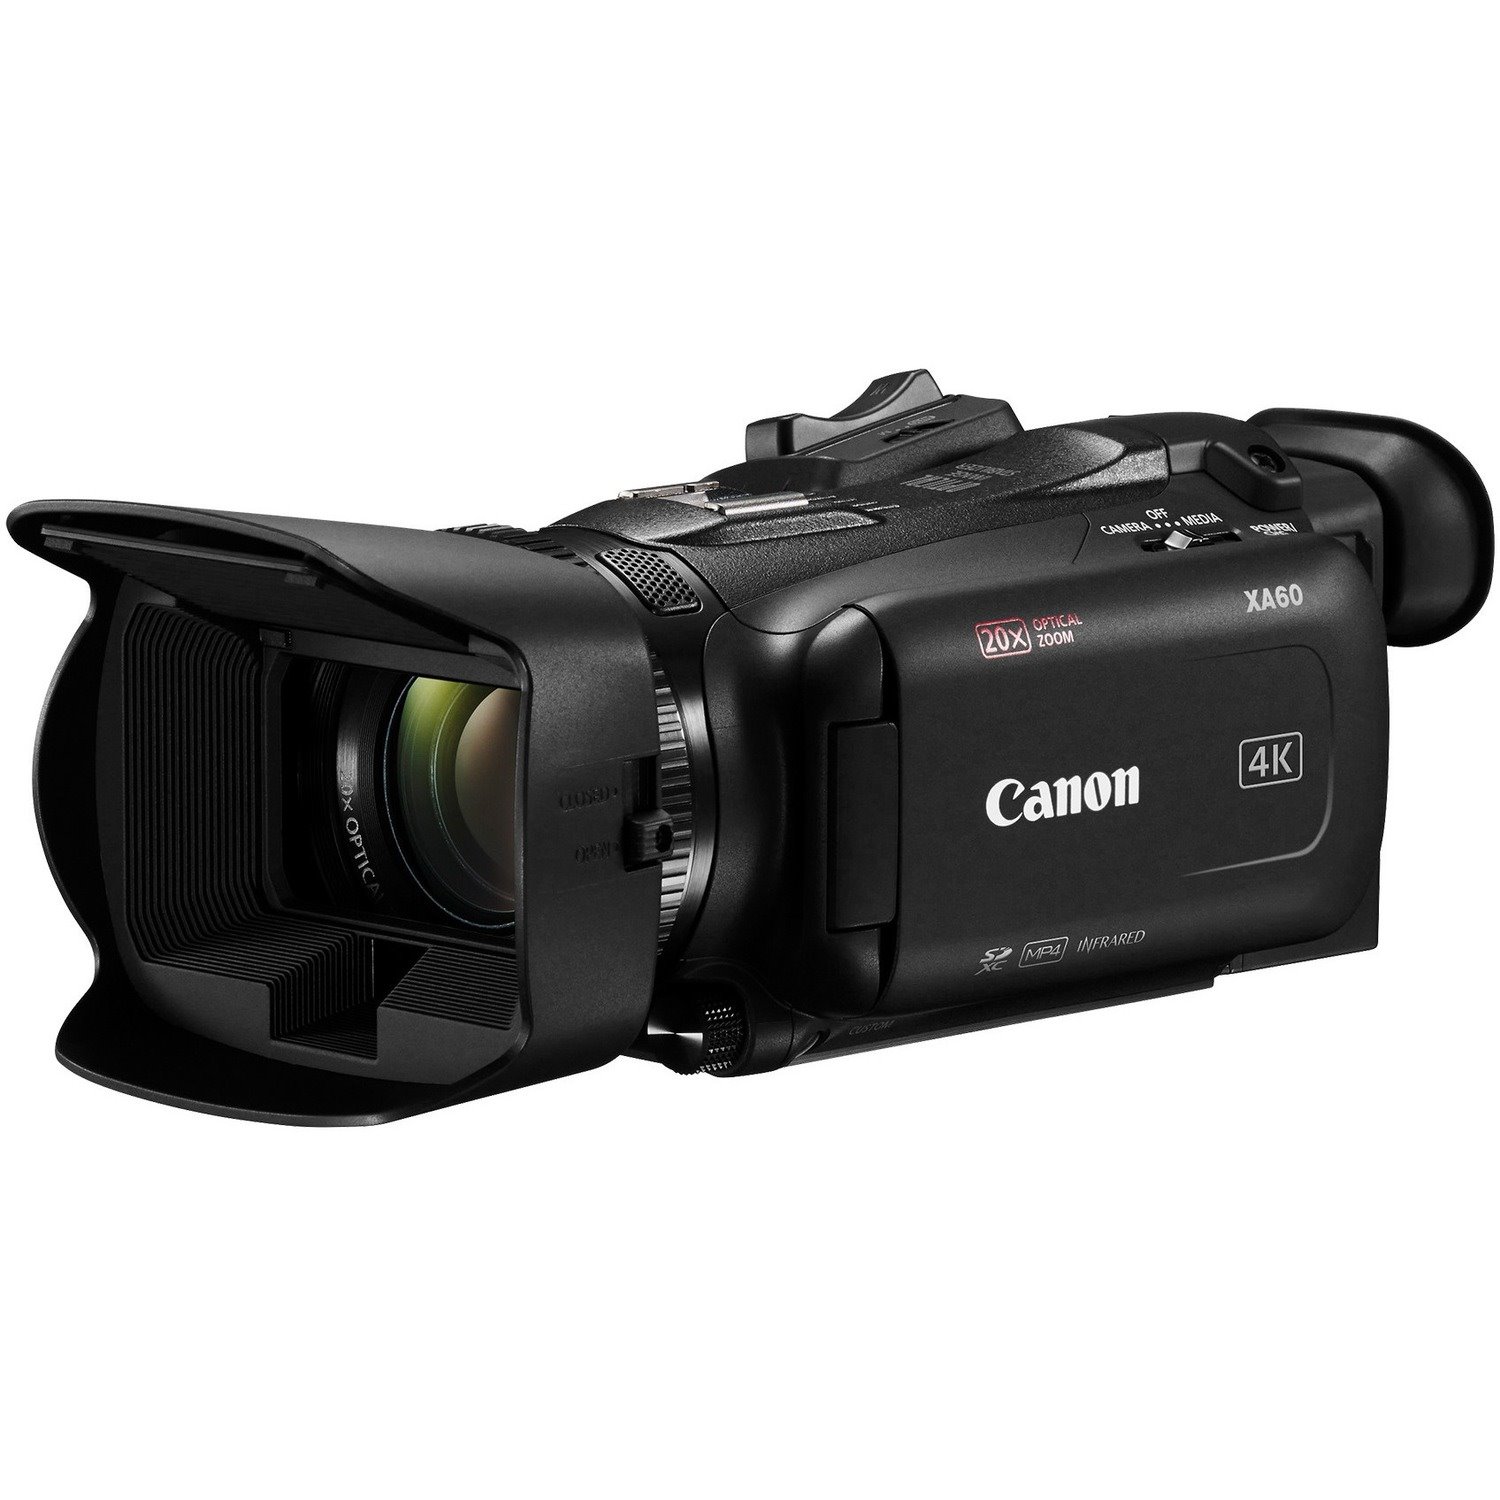 Canon XA60 Professional Digital Camcorder - 8.9 cm (3.5") LCD Touchscreen - 1/2.3" CMOS - 4K